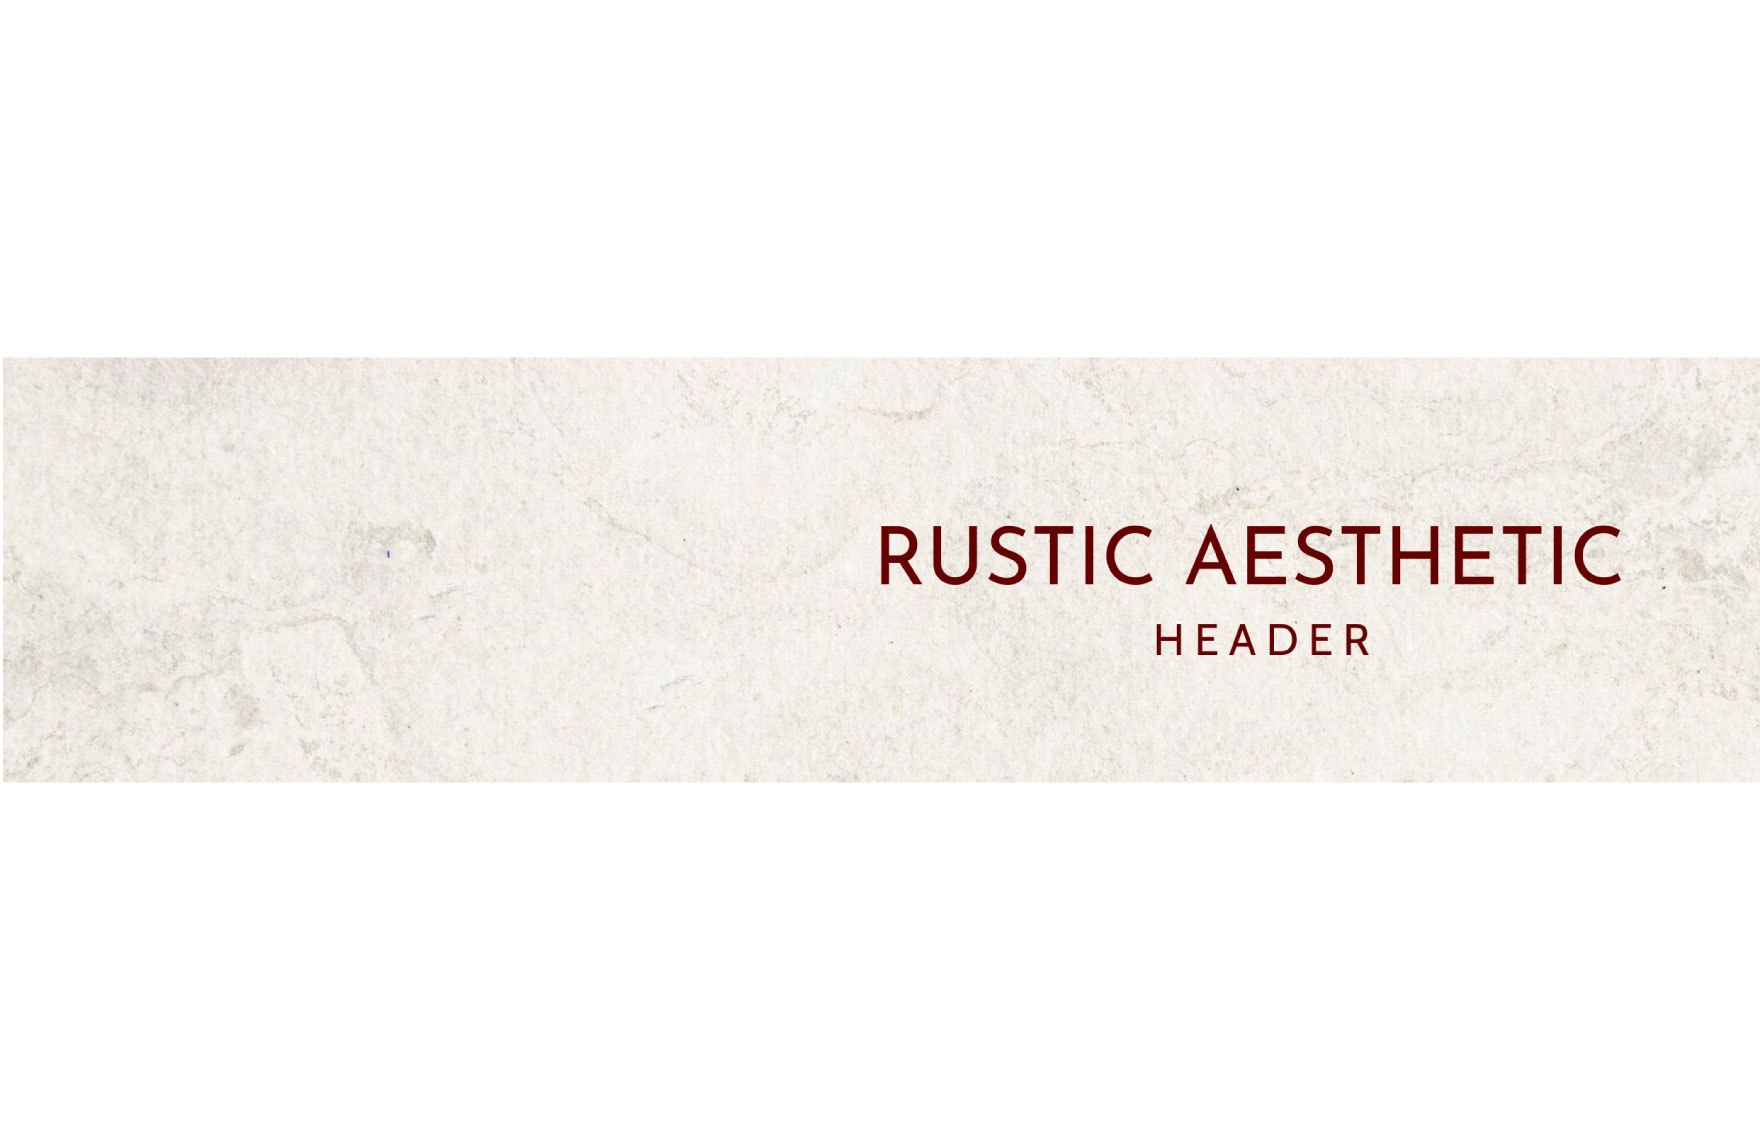 Rustic Aesthetic Header